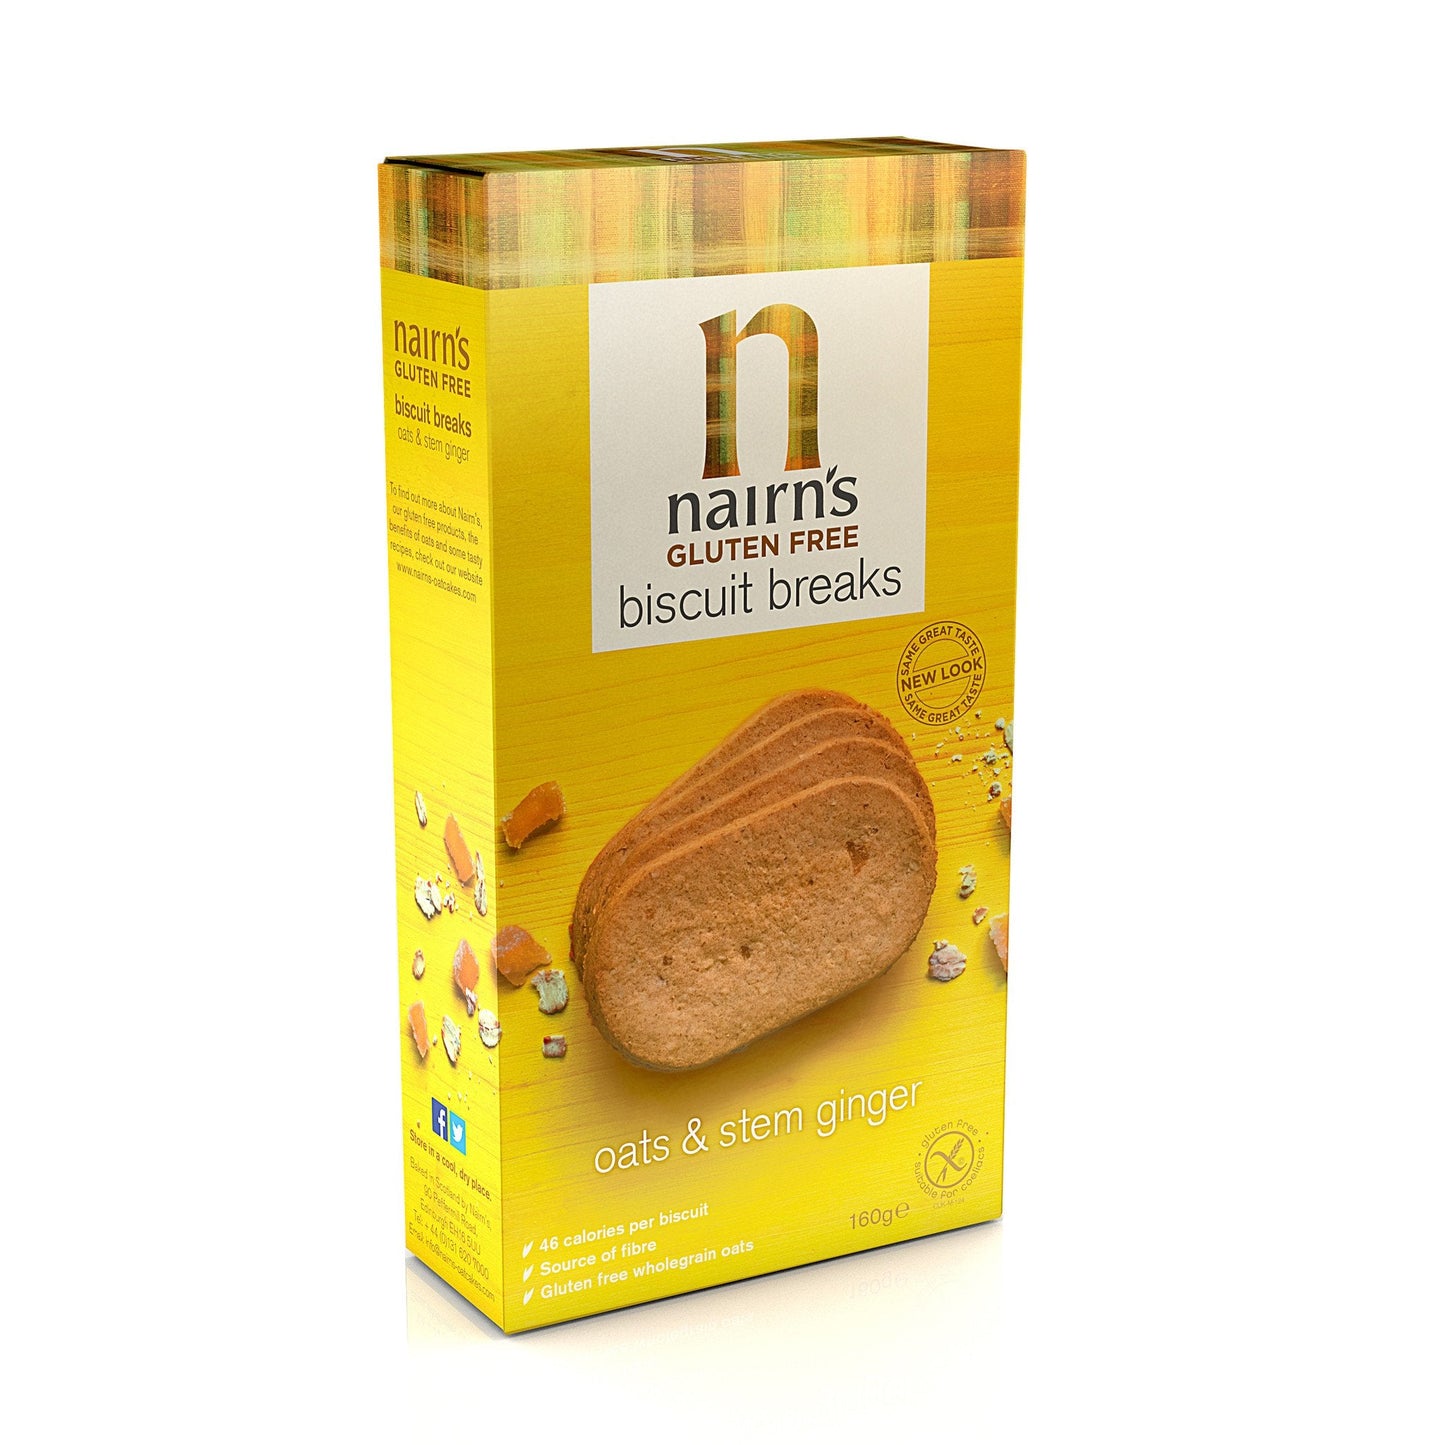 Nairns Gluten Free Oats & Stem Ginger Biscuit Breaks 160g - Just Natural